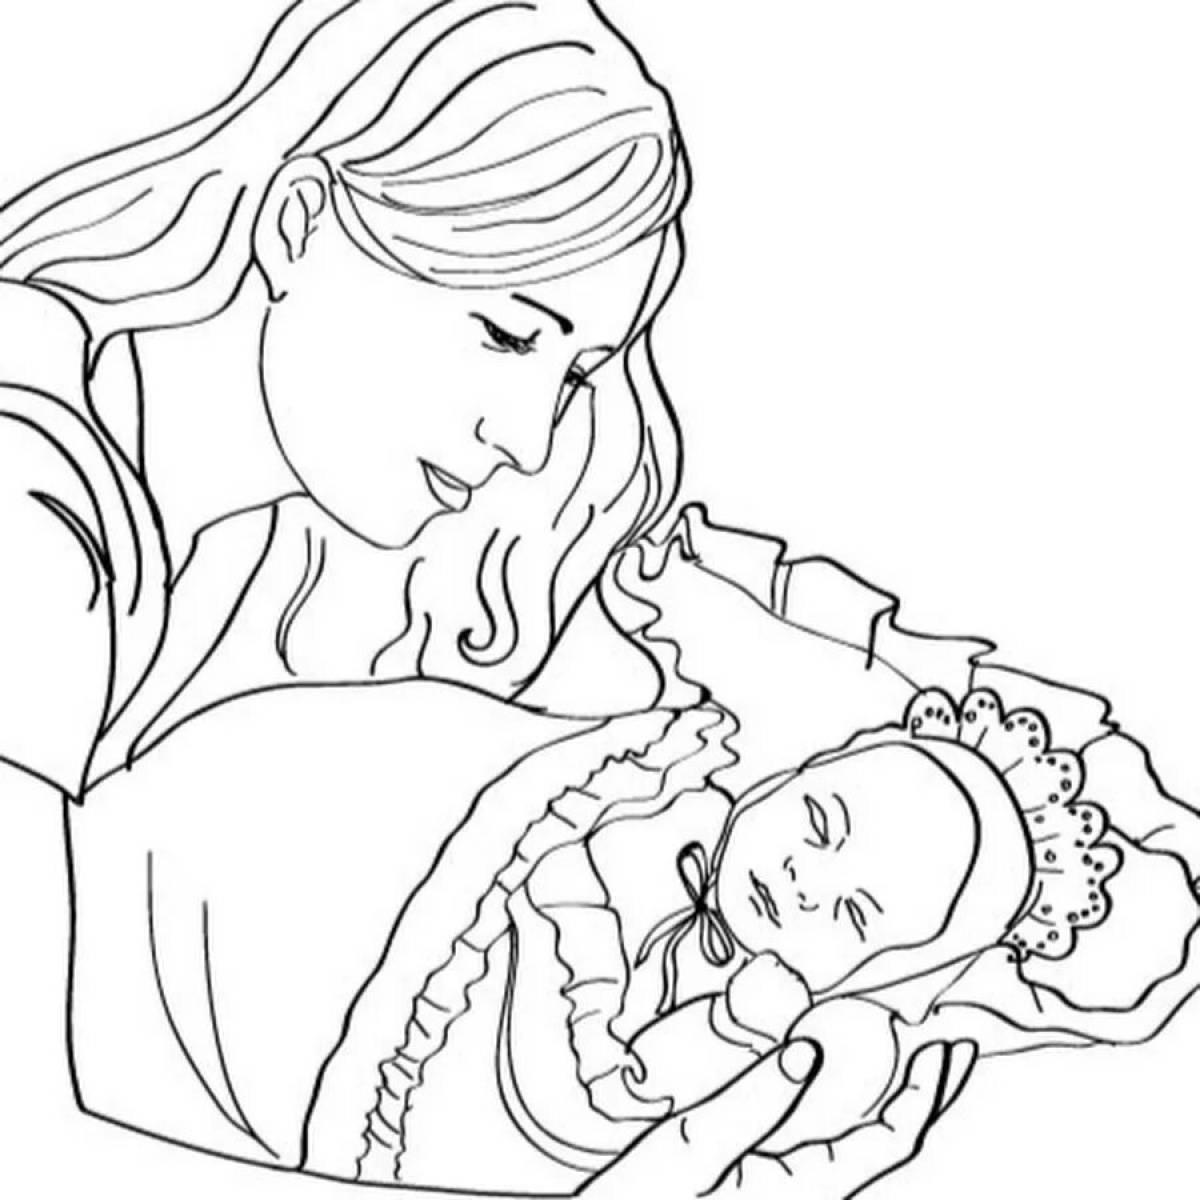 Раскраска мать ребенка. Рисунок ко Дню матери. Мама раскраска для детей. Раскраска мамы и малыши. Раскраска мама с ребенком на руках.